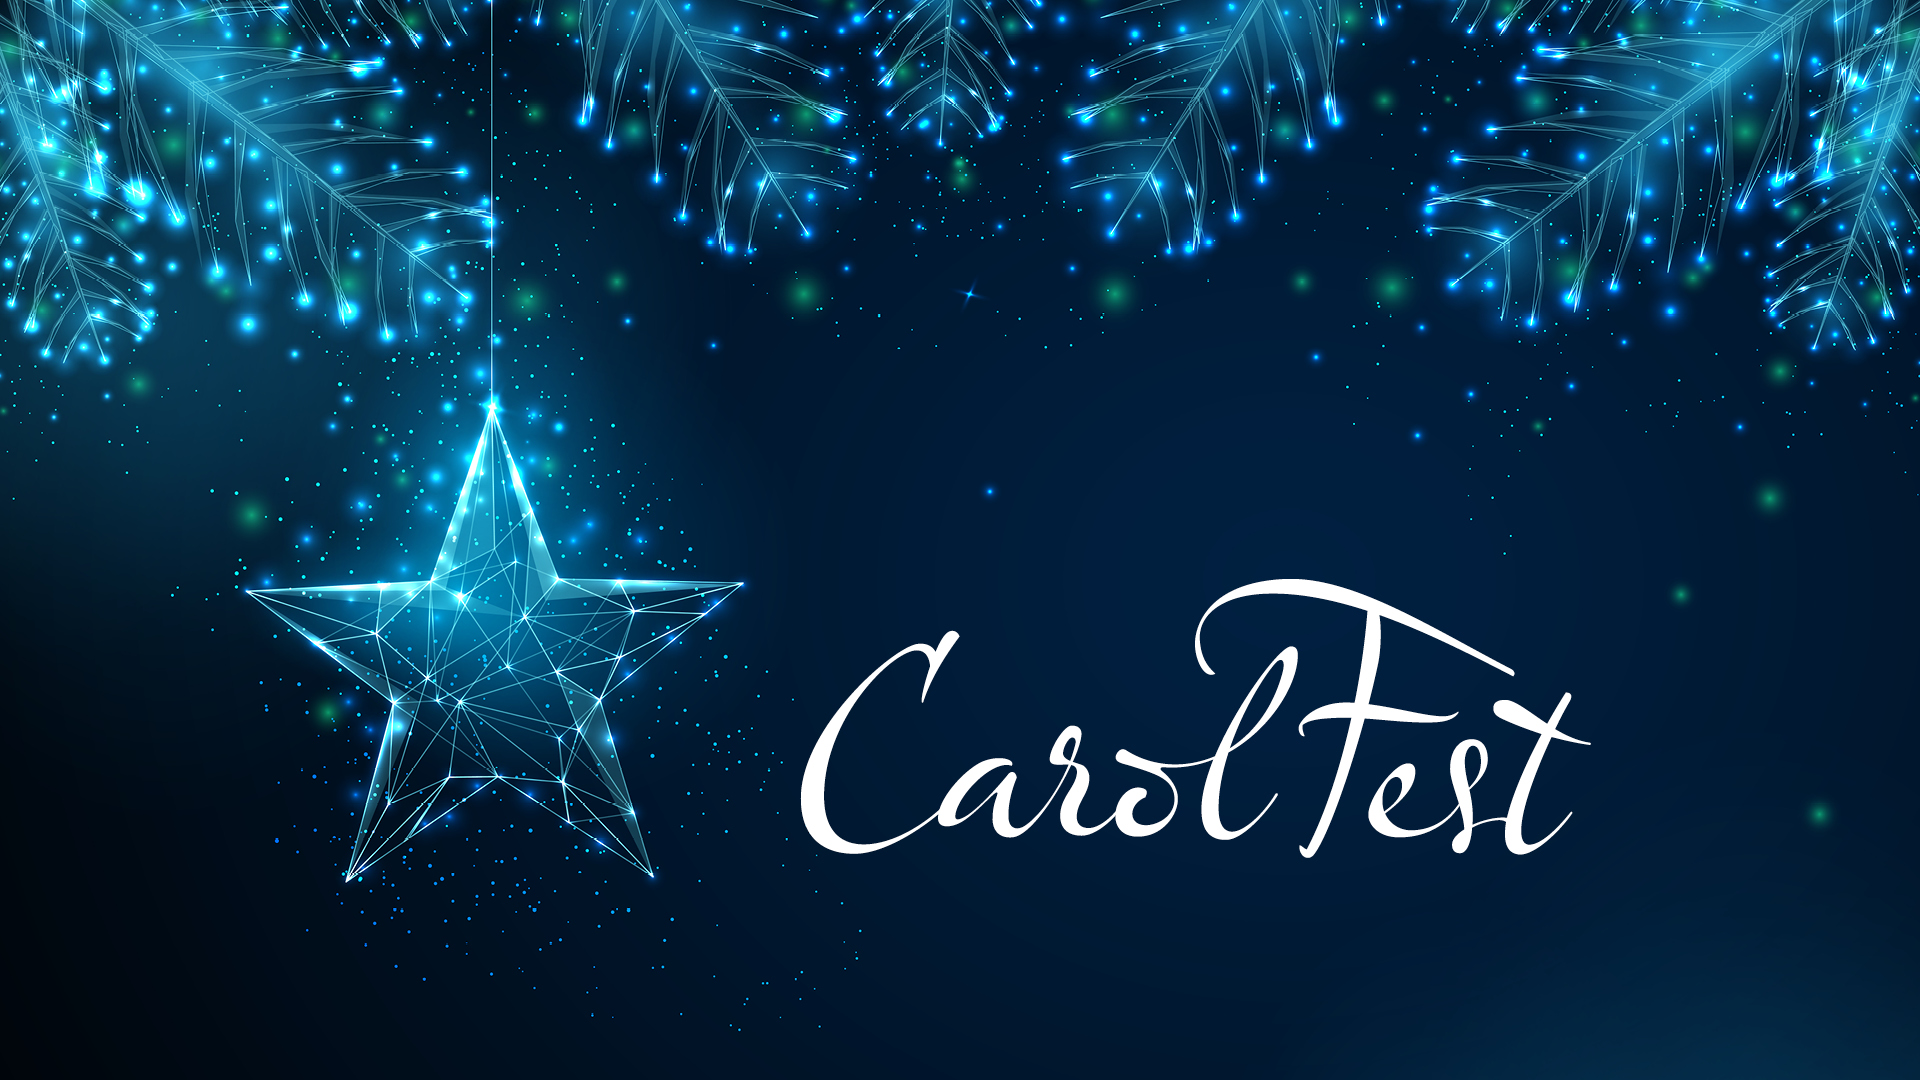 CarolFest Christmas Concert
December 11 | 3:00 p.m. | Oak Brook
 
